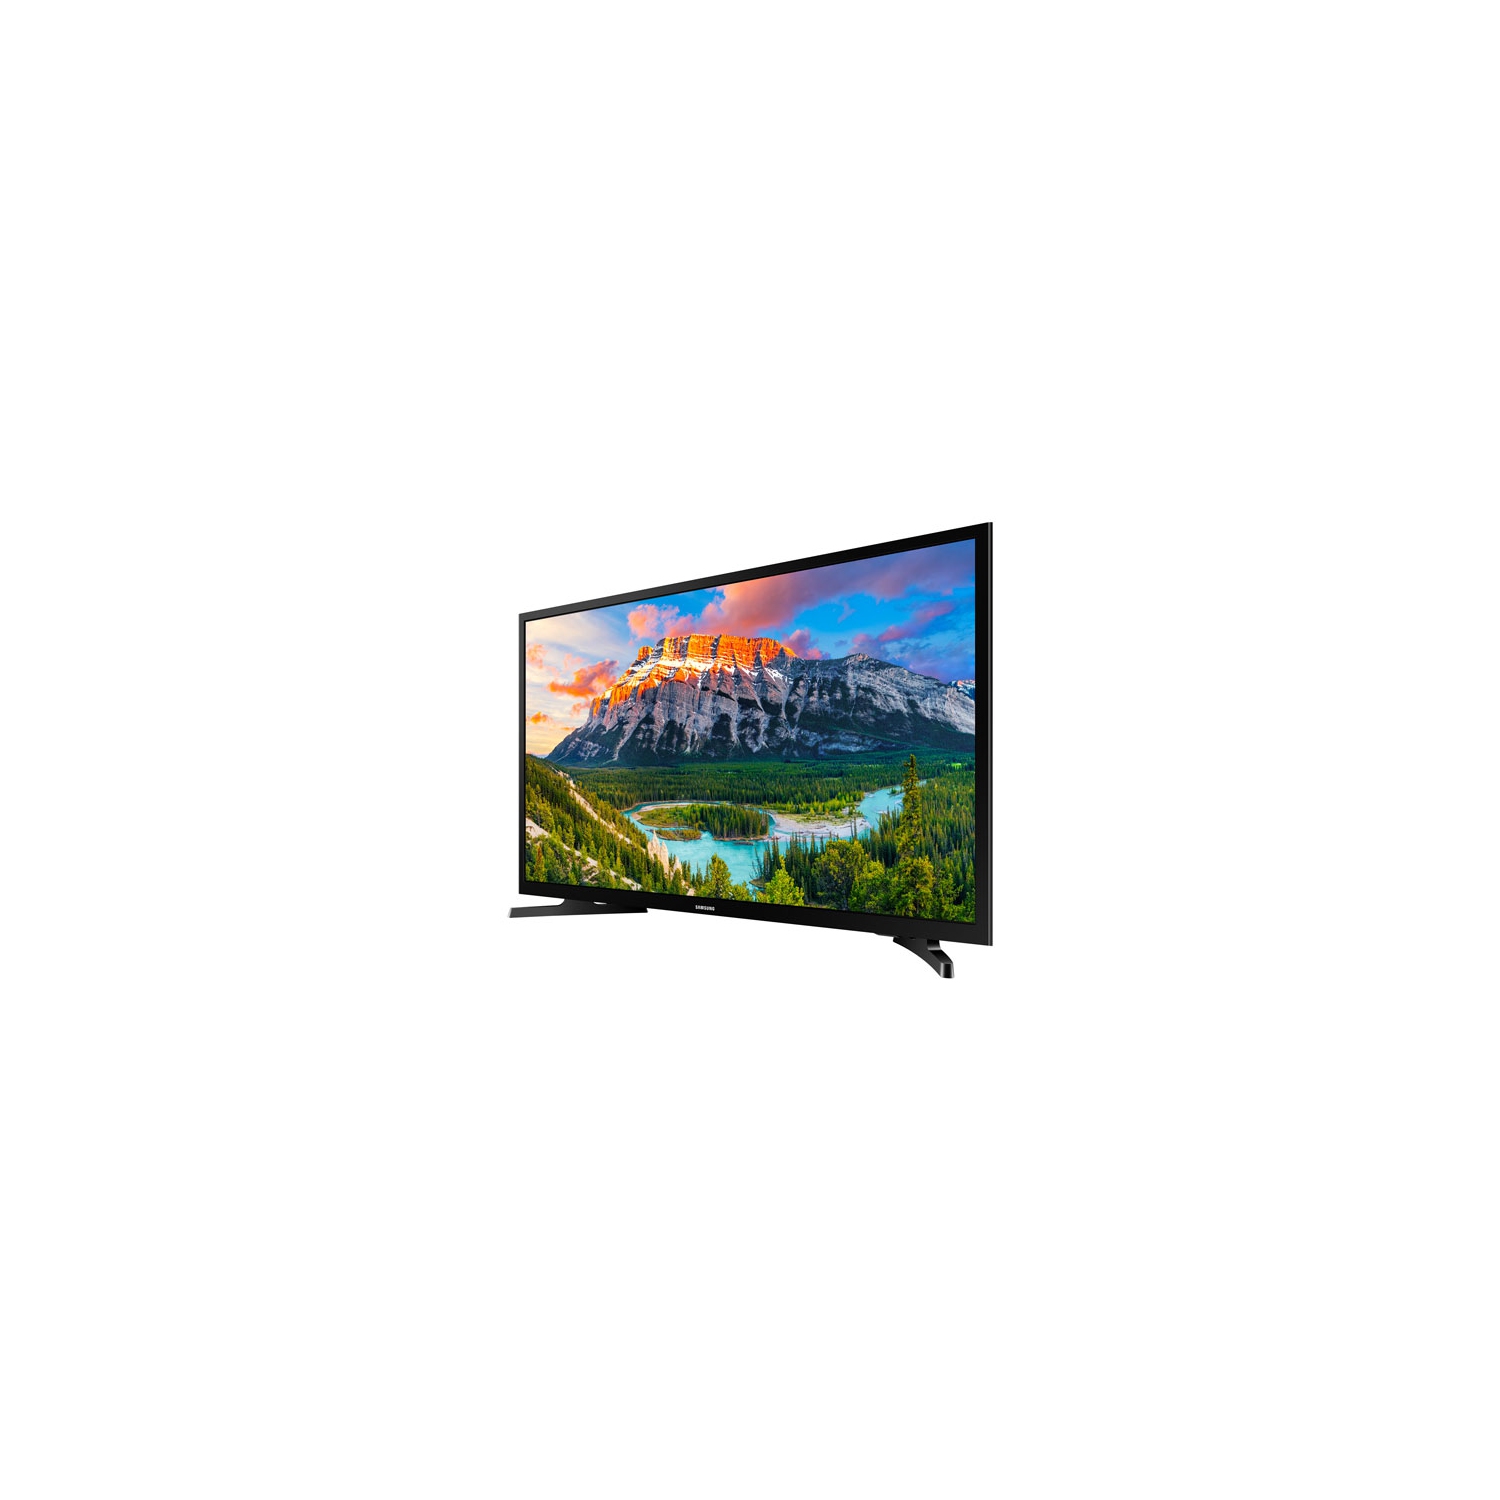 Open Box - Samsung 32" 1080p HD LED Tizen Smart TV (UN32N5300AFXZC) - Glossy Black